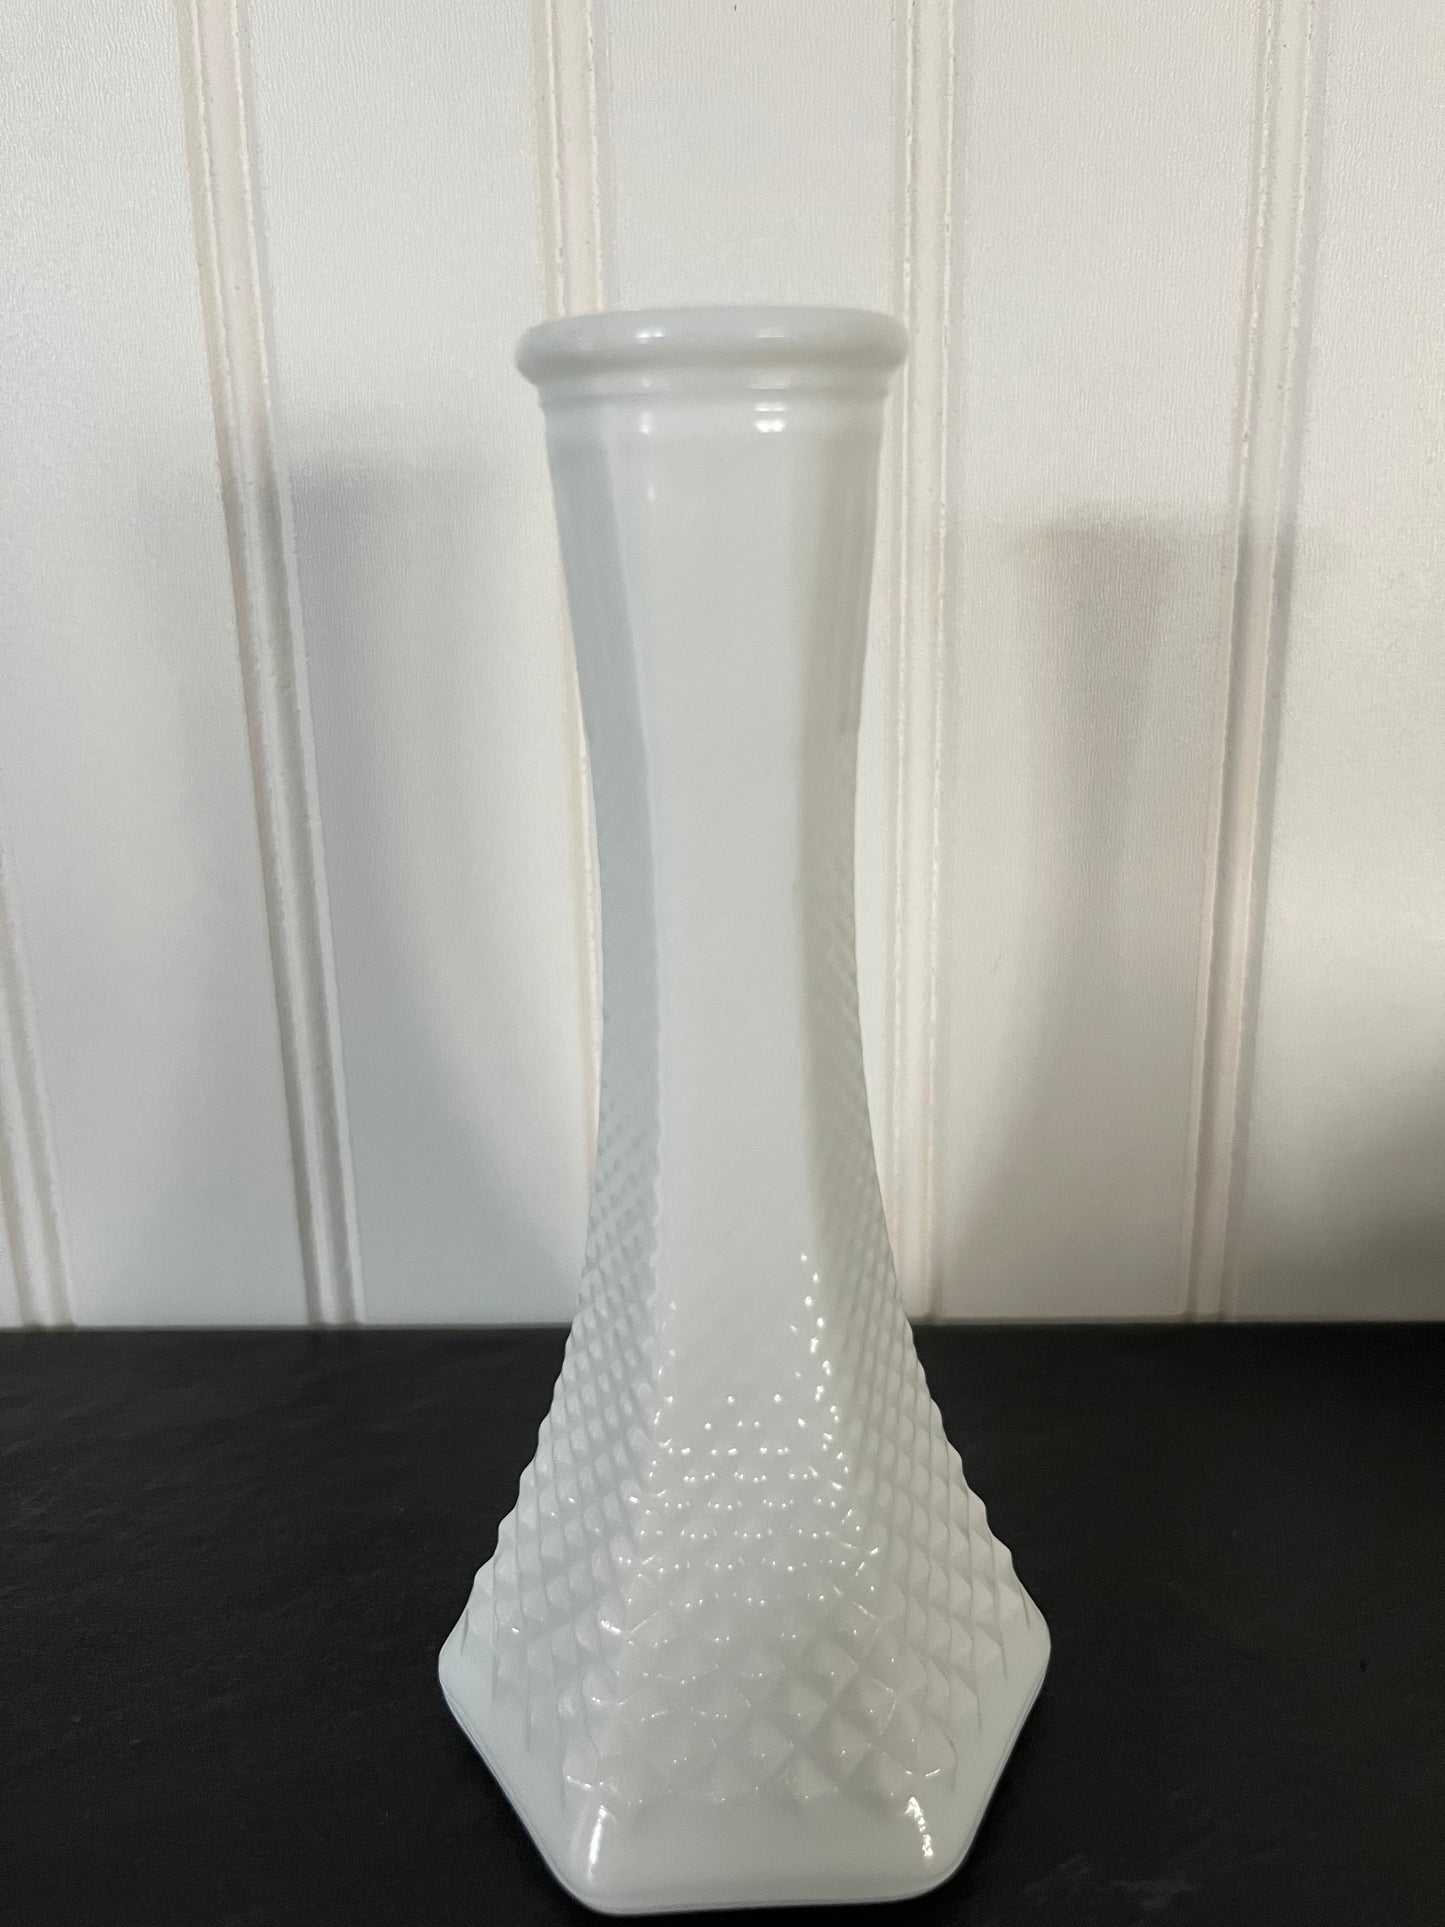 Vintage Milk Glass EO Brody Hobnail Diamond  Bud Vase - 6" High - Classic Glassware Decor